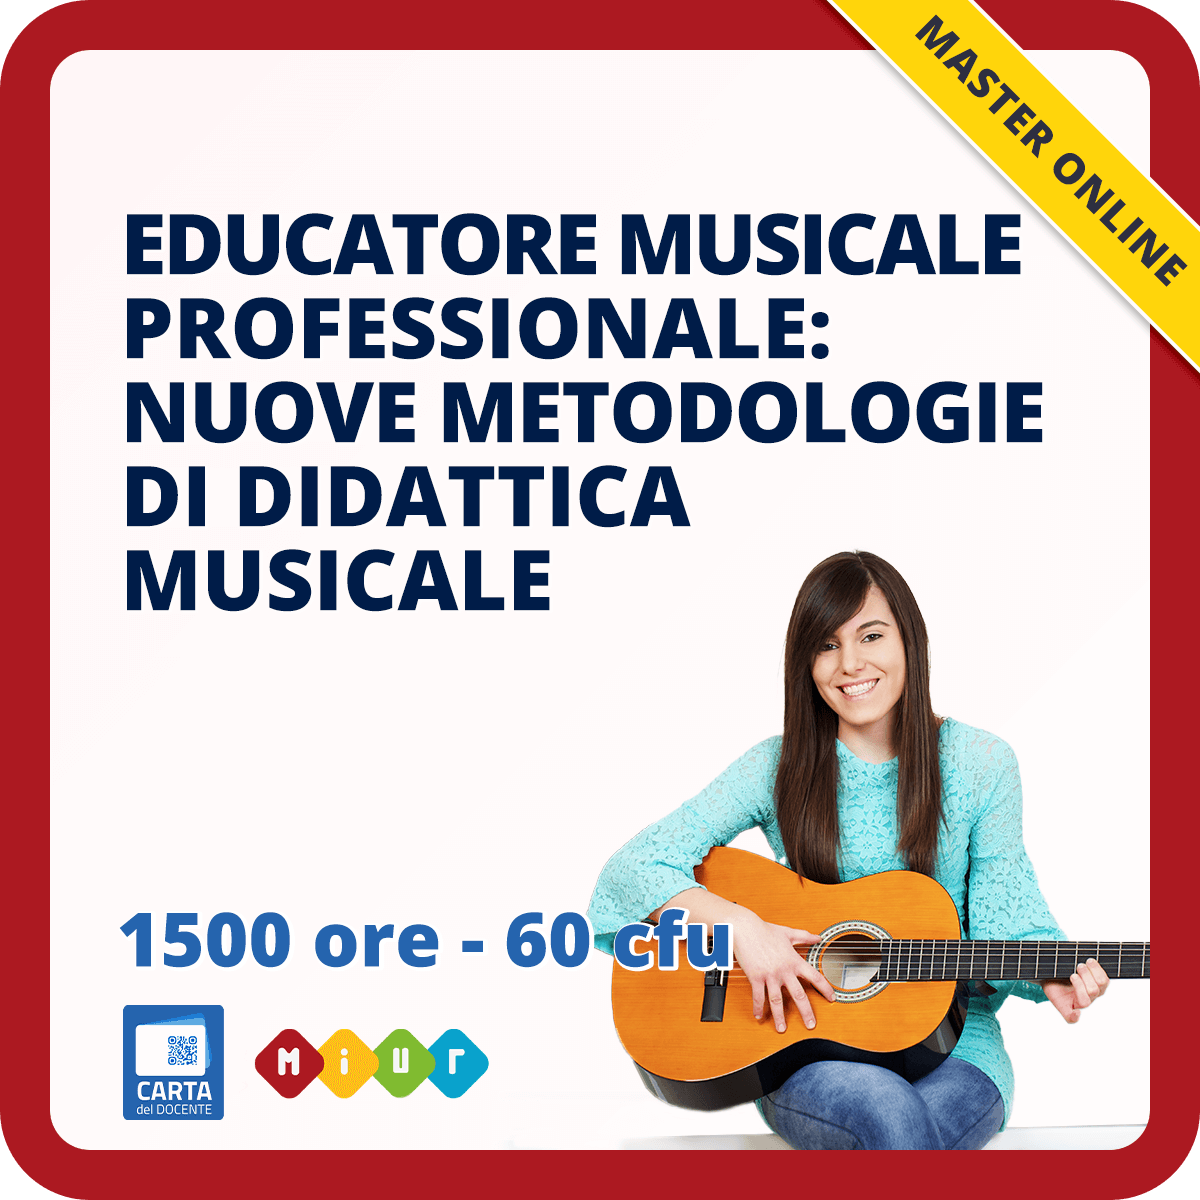 Master Educatore musicale professionale: nuove metodologie di didattica musicale